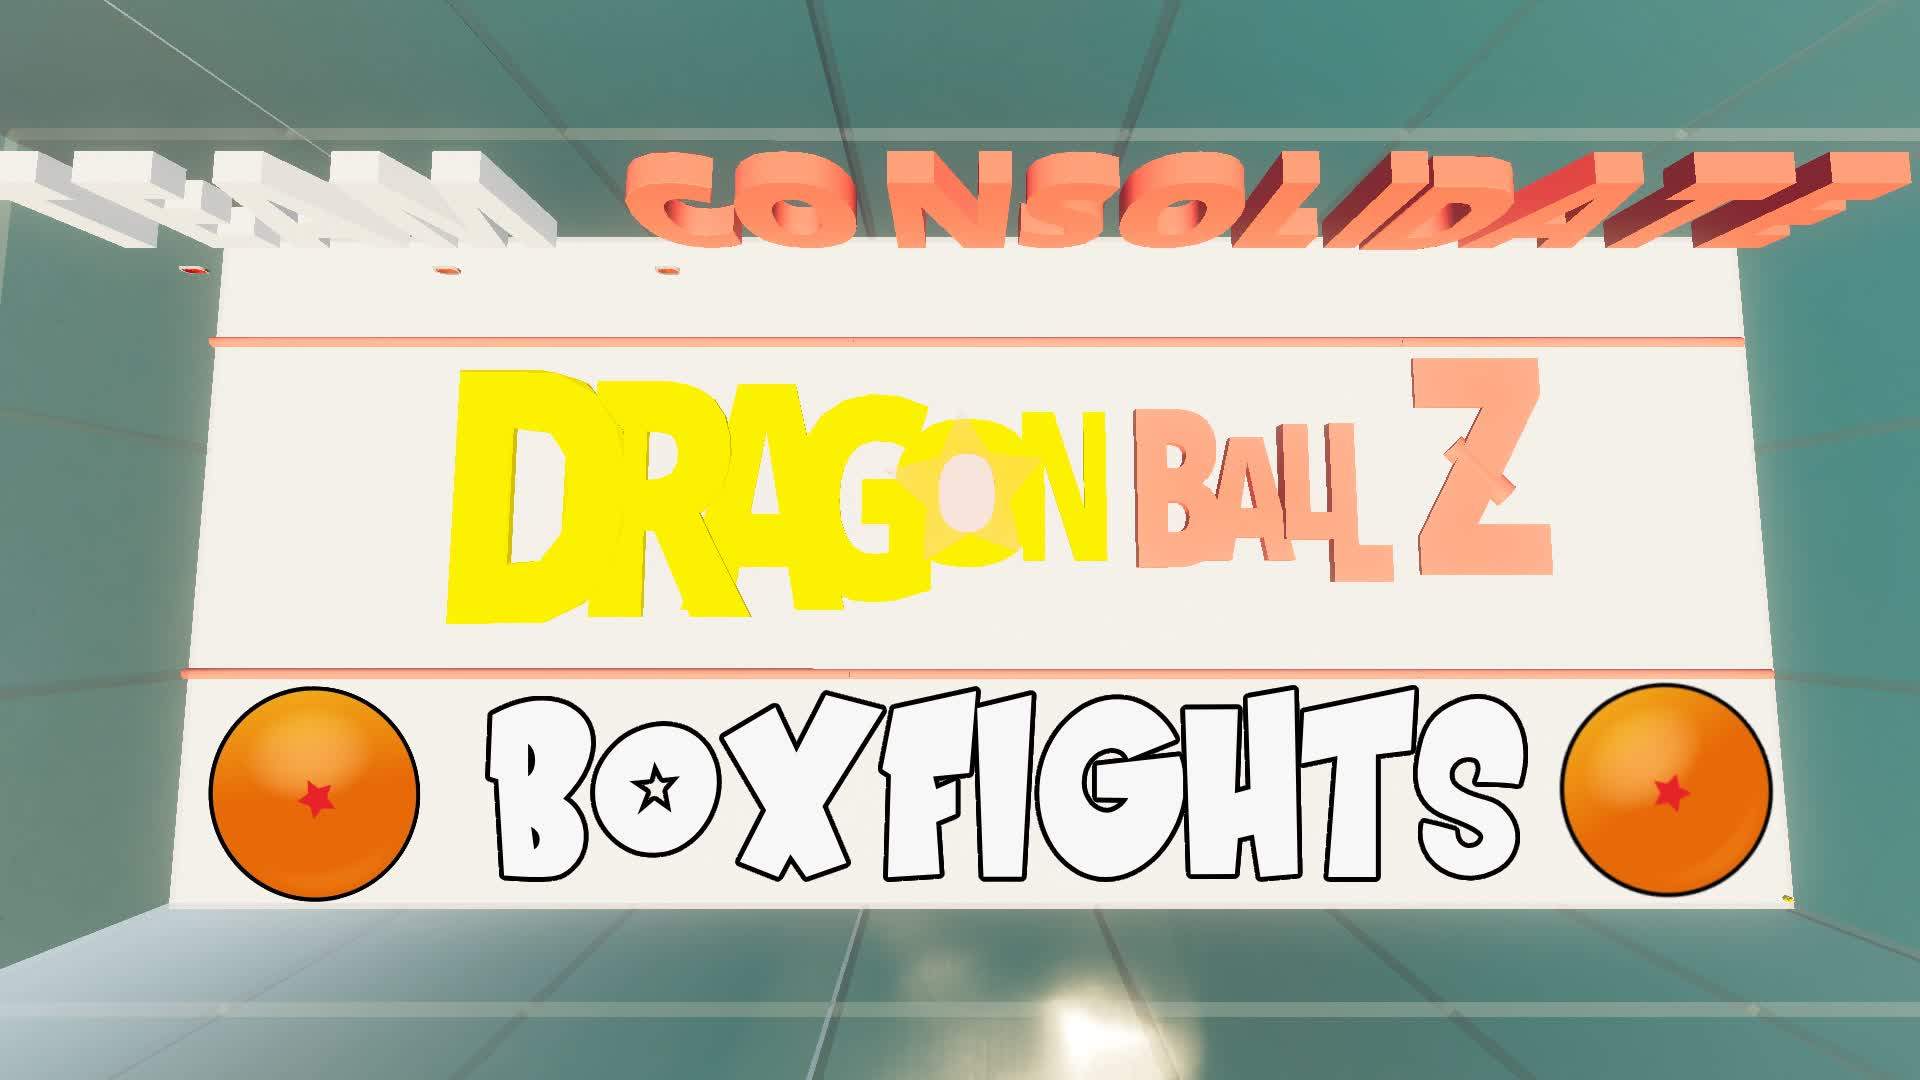 Dragon Ball Z BoxFights